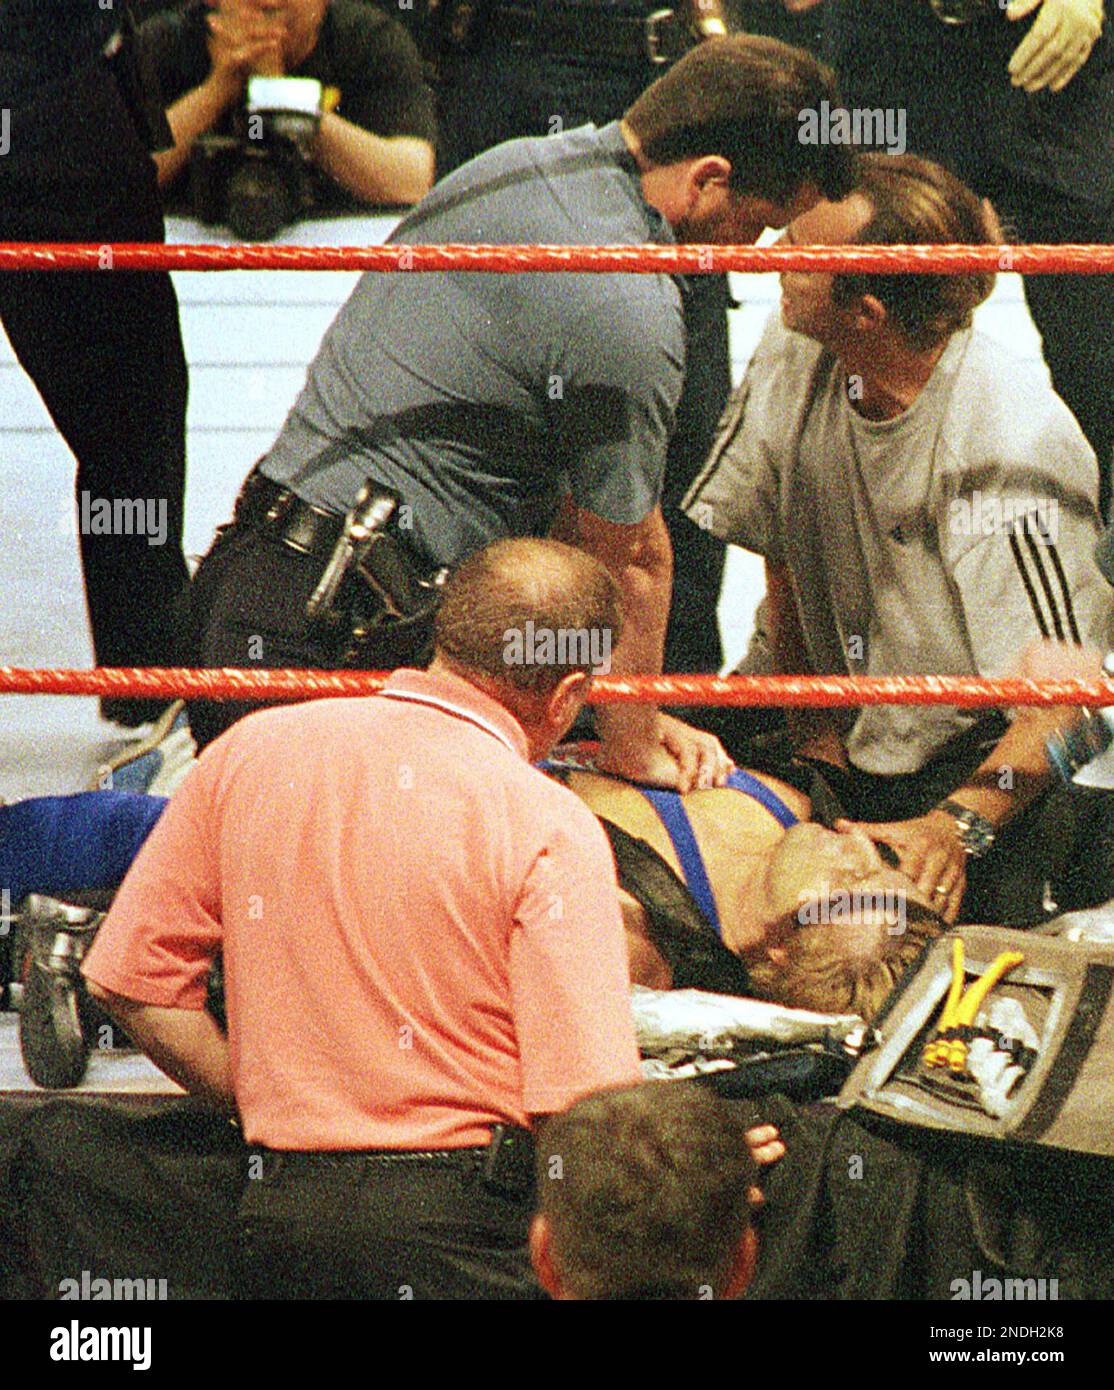 WWE star Bray Wyatt died of heart attack: report | Fox News